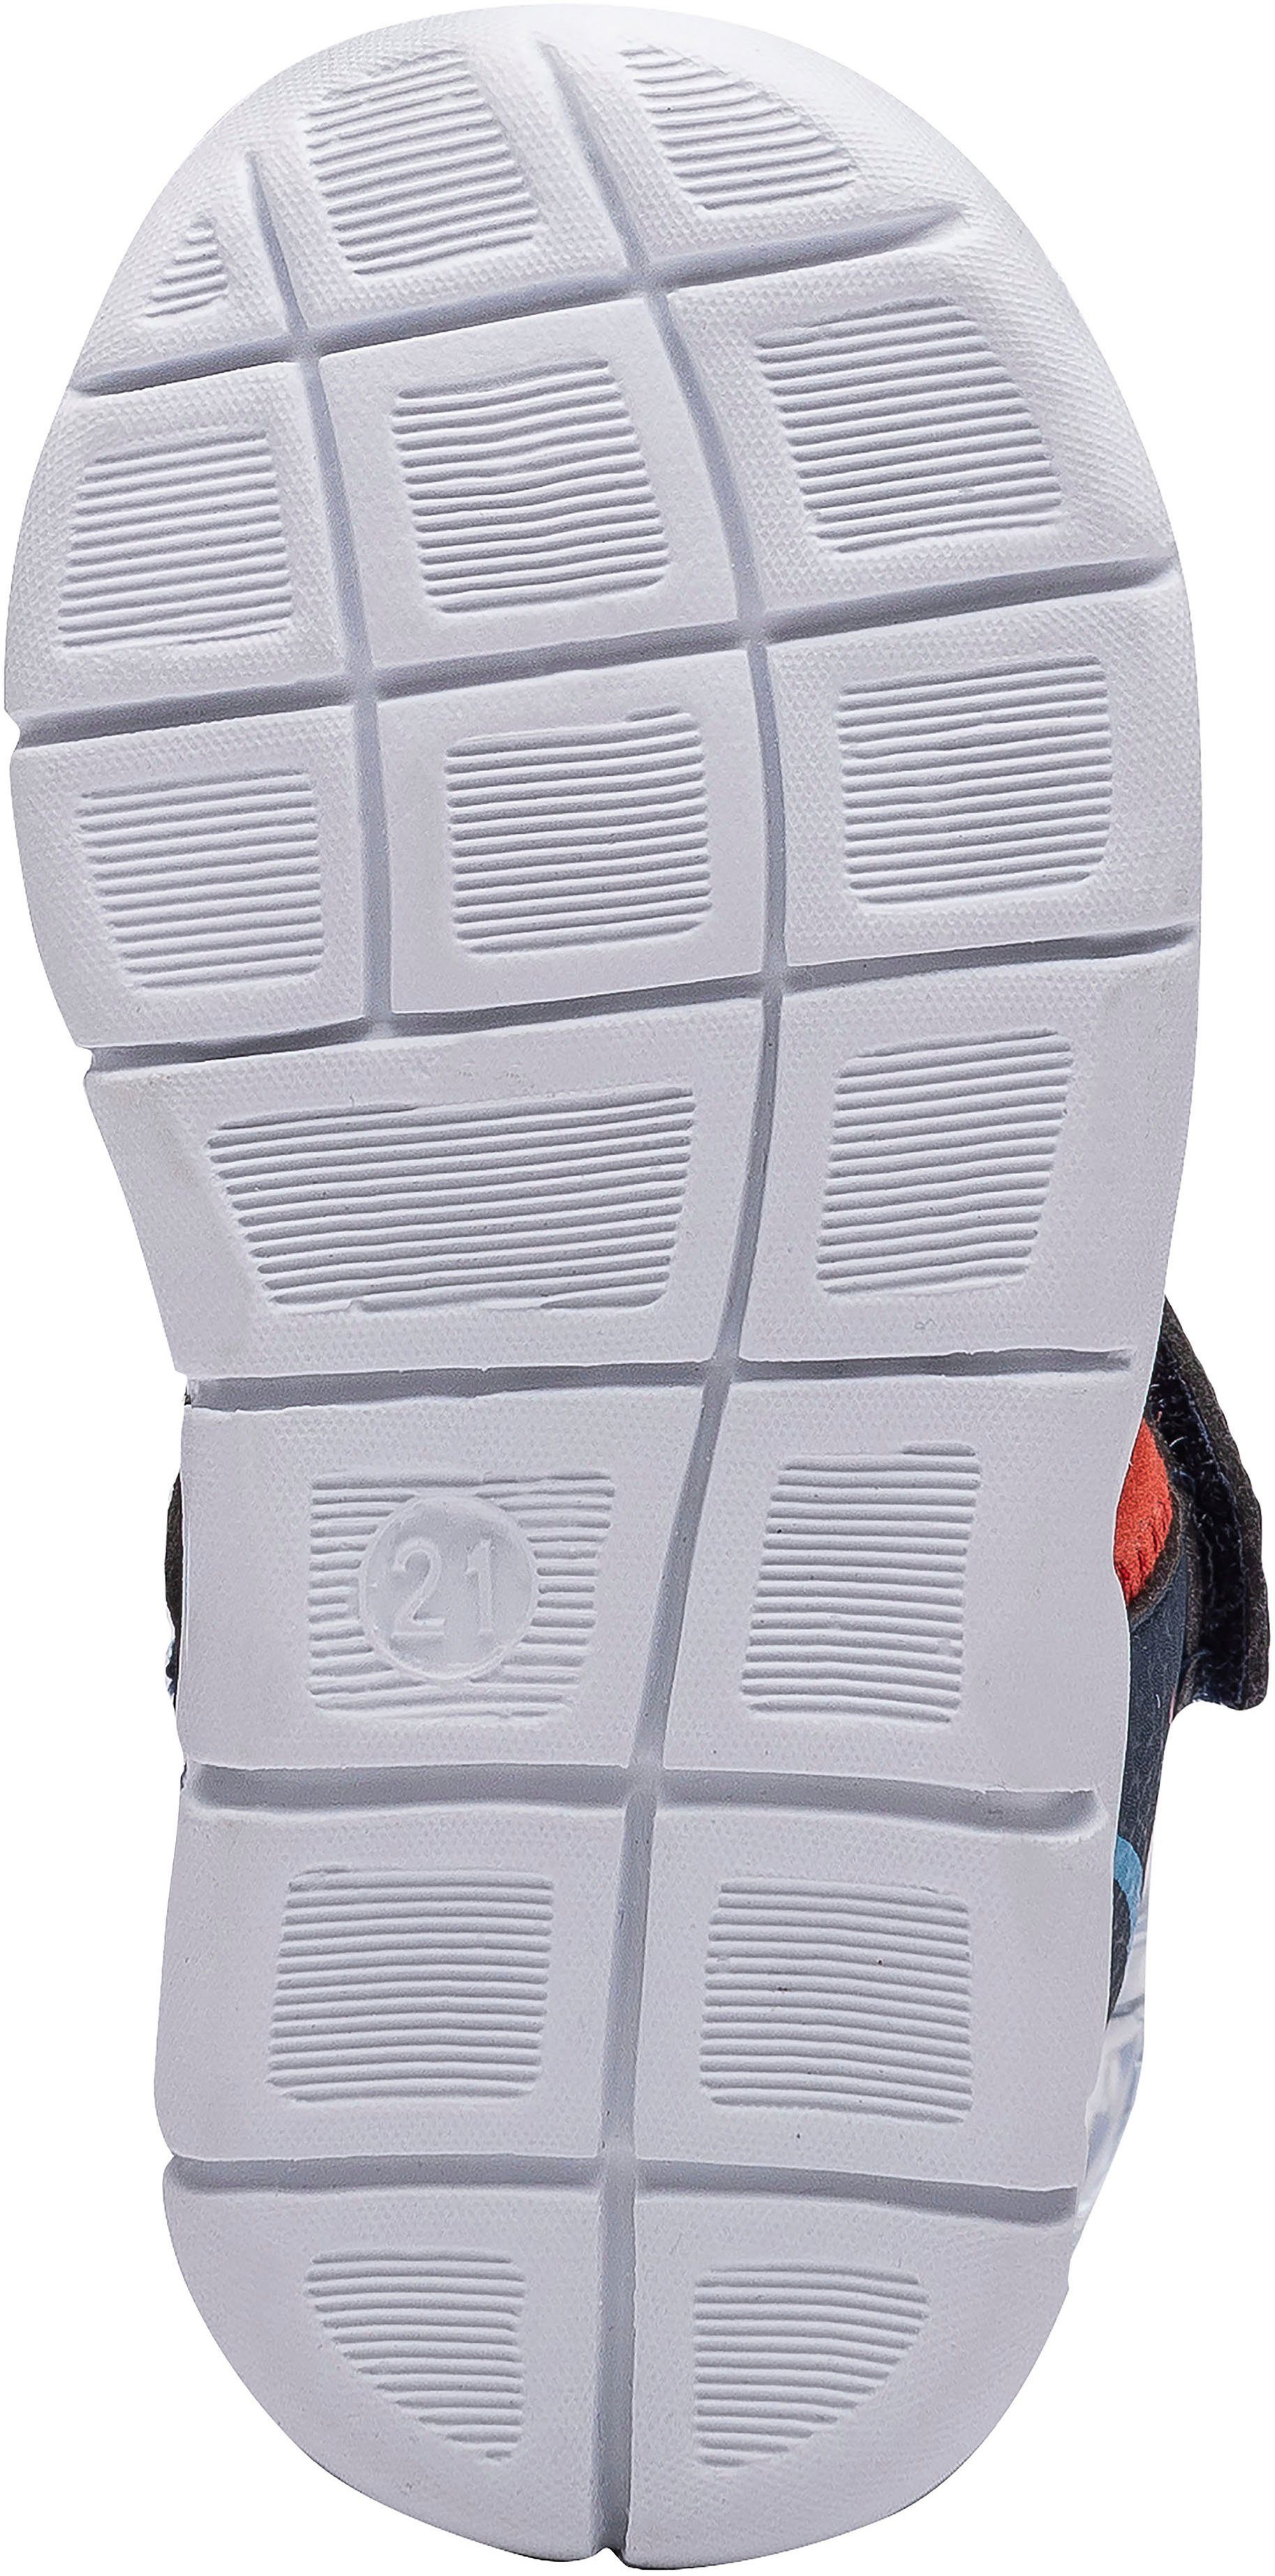 KangaROOS K-Grobi Sandale mit Klettverschluss navy